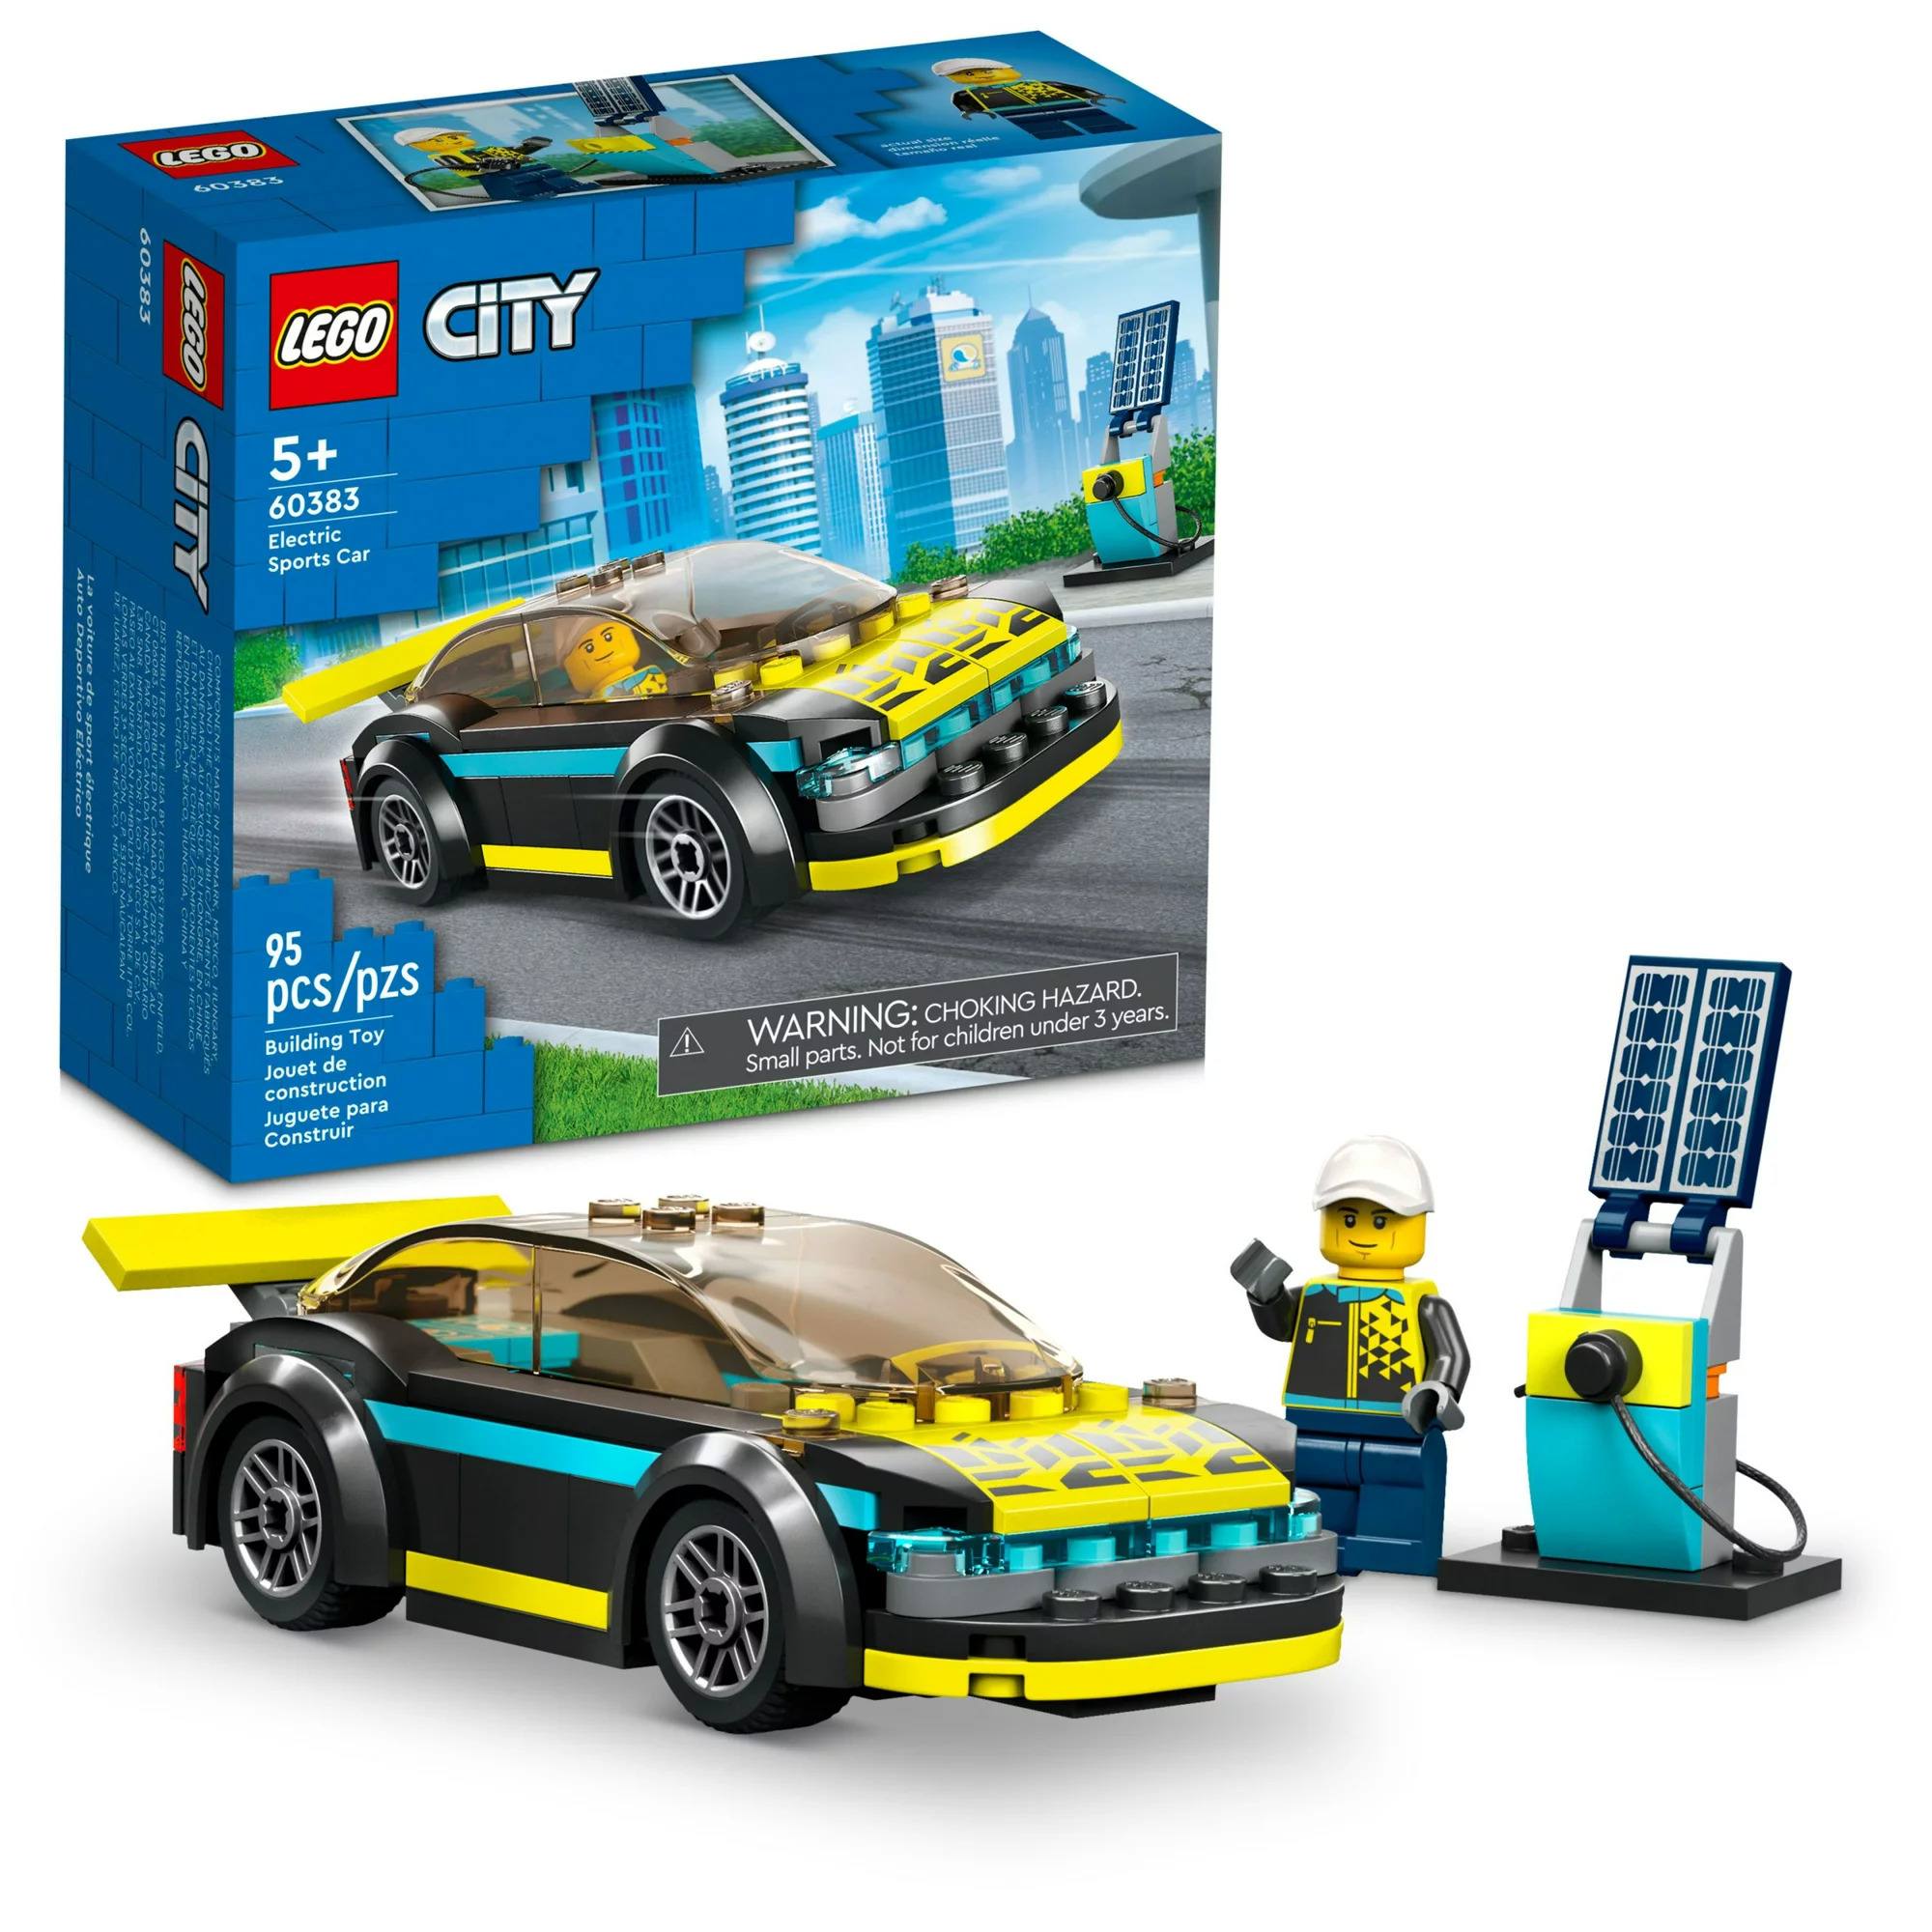 90-Piece LEGO City Electric Sports Car Building Set (60383) $7.50 + Free S&H w/ Walmart+ or $35+